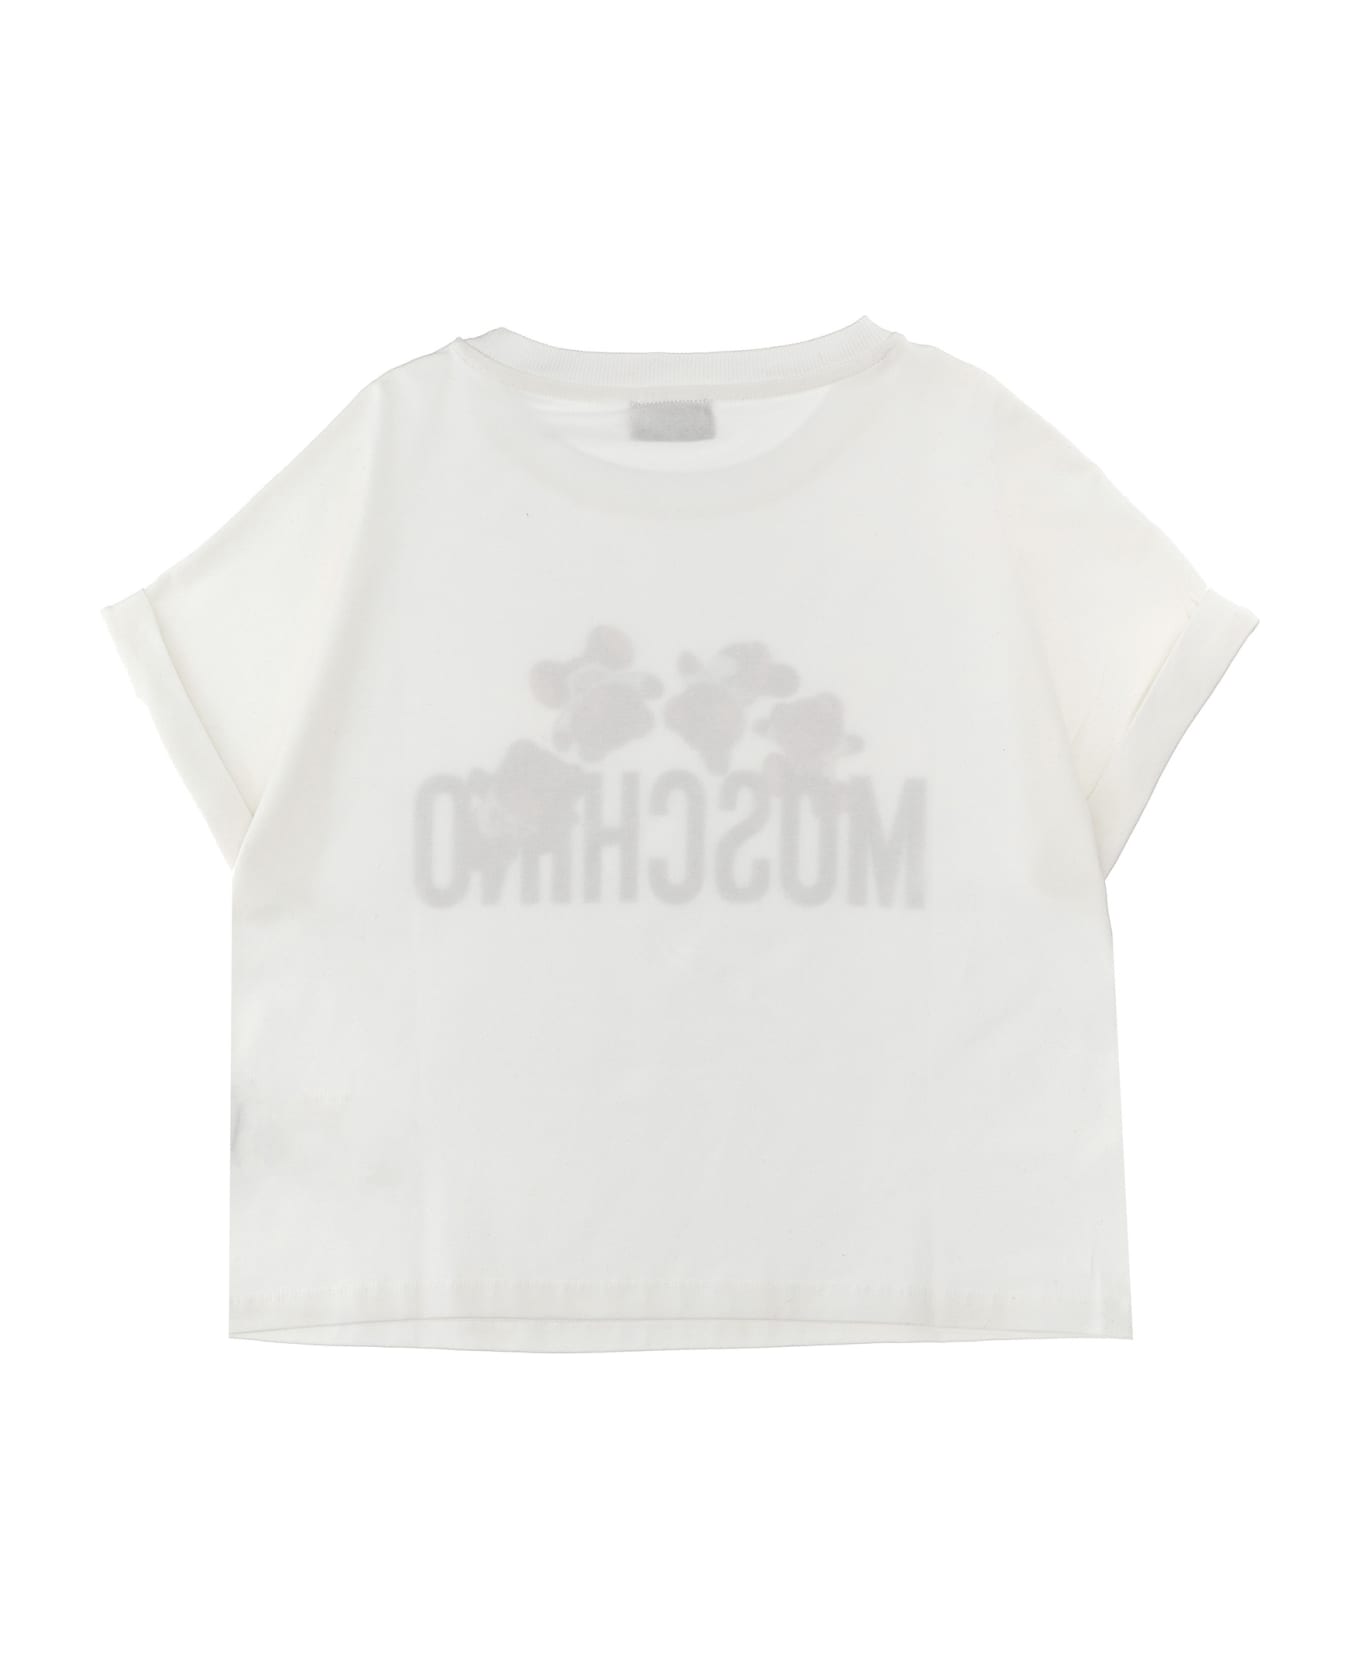 Moschino Logo Print T-shirt + Leggings Set - White/Black